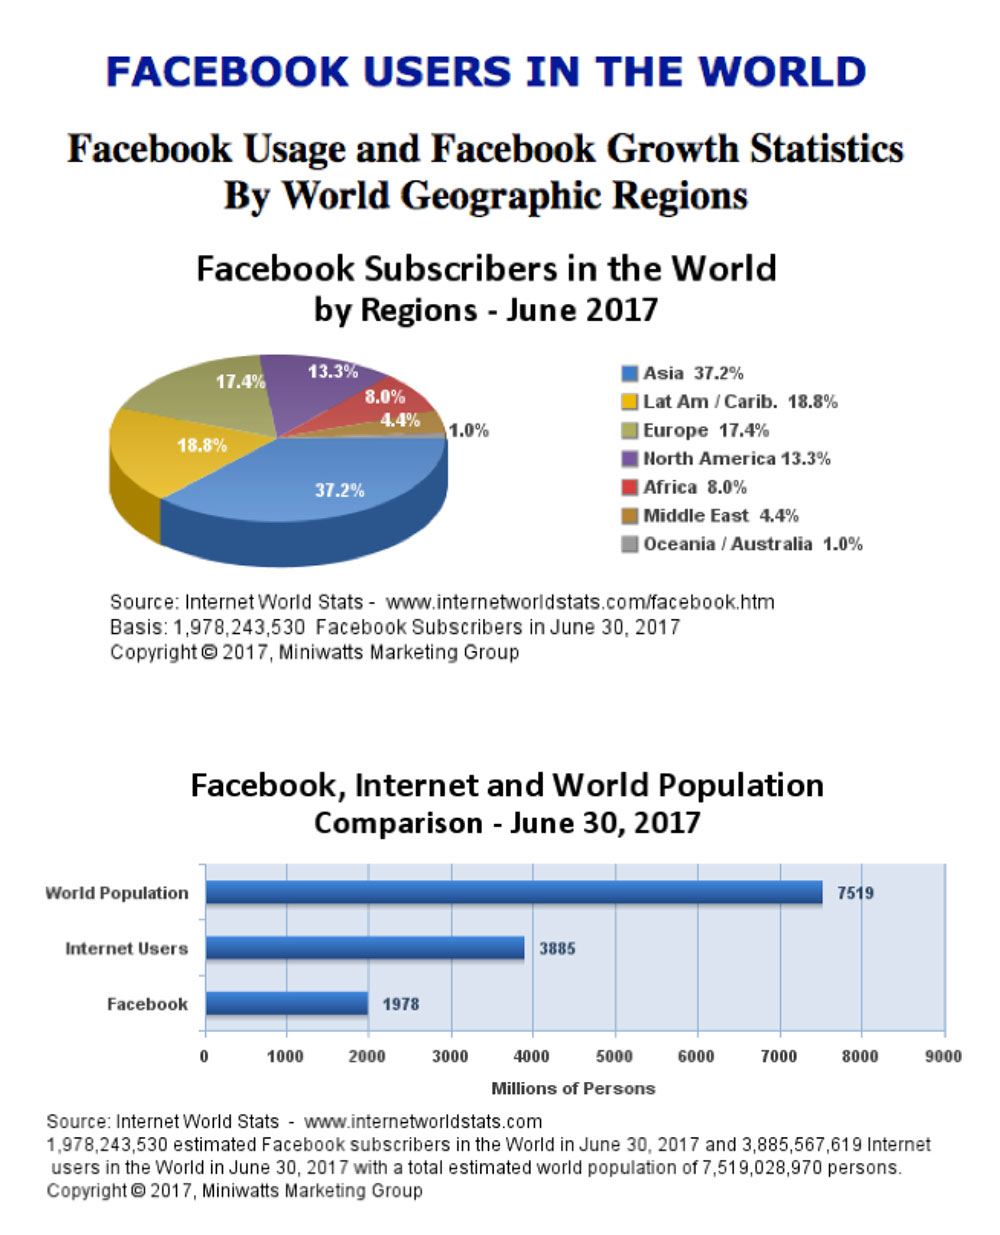 Geographic breakdown of Facebook users